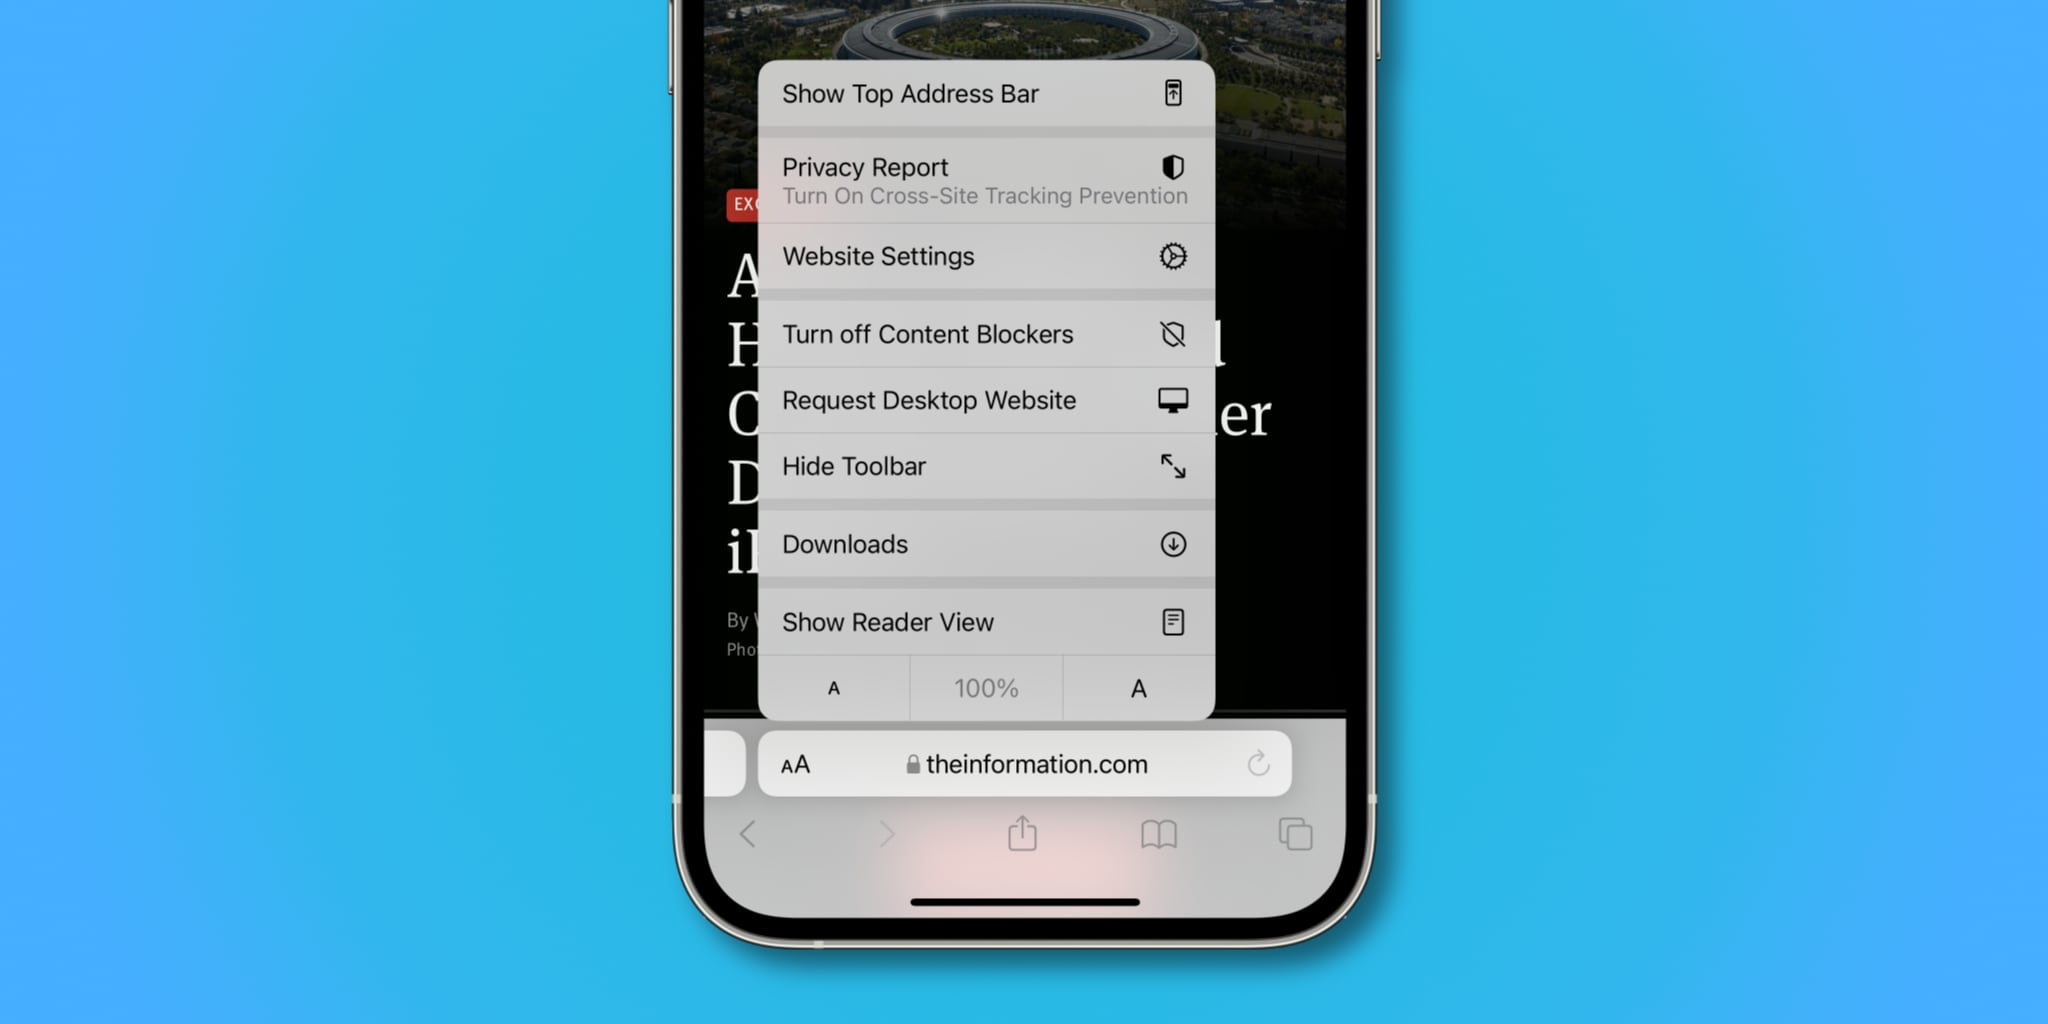 iPhone screenshot illustrating the bottom address bar with the “aA” menu options in Safari on iOS 15